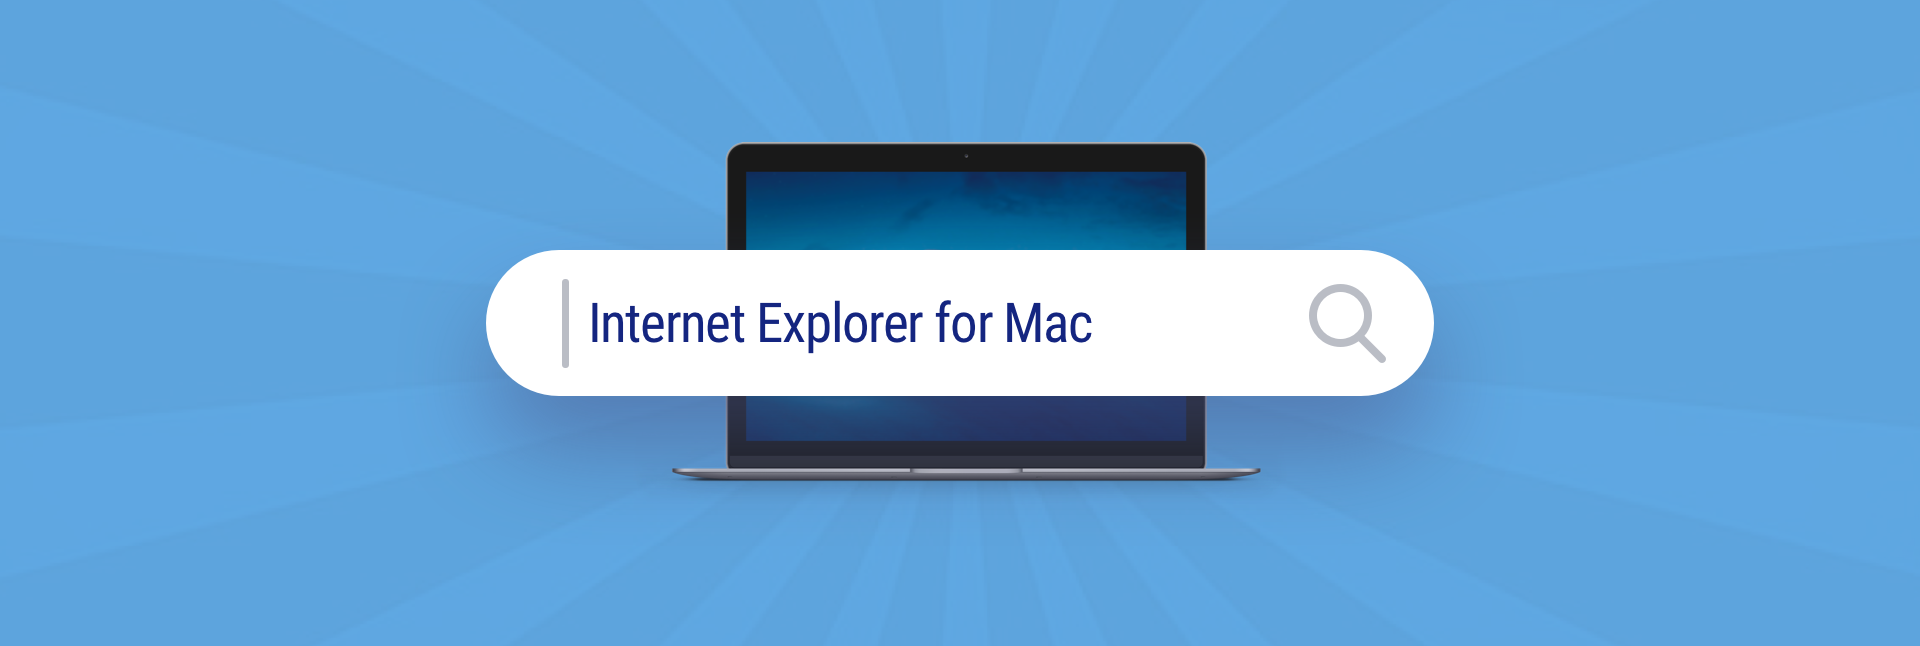 internet explorer for apple macbook pro